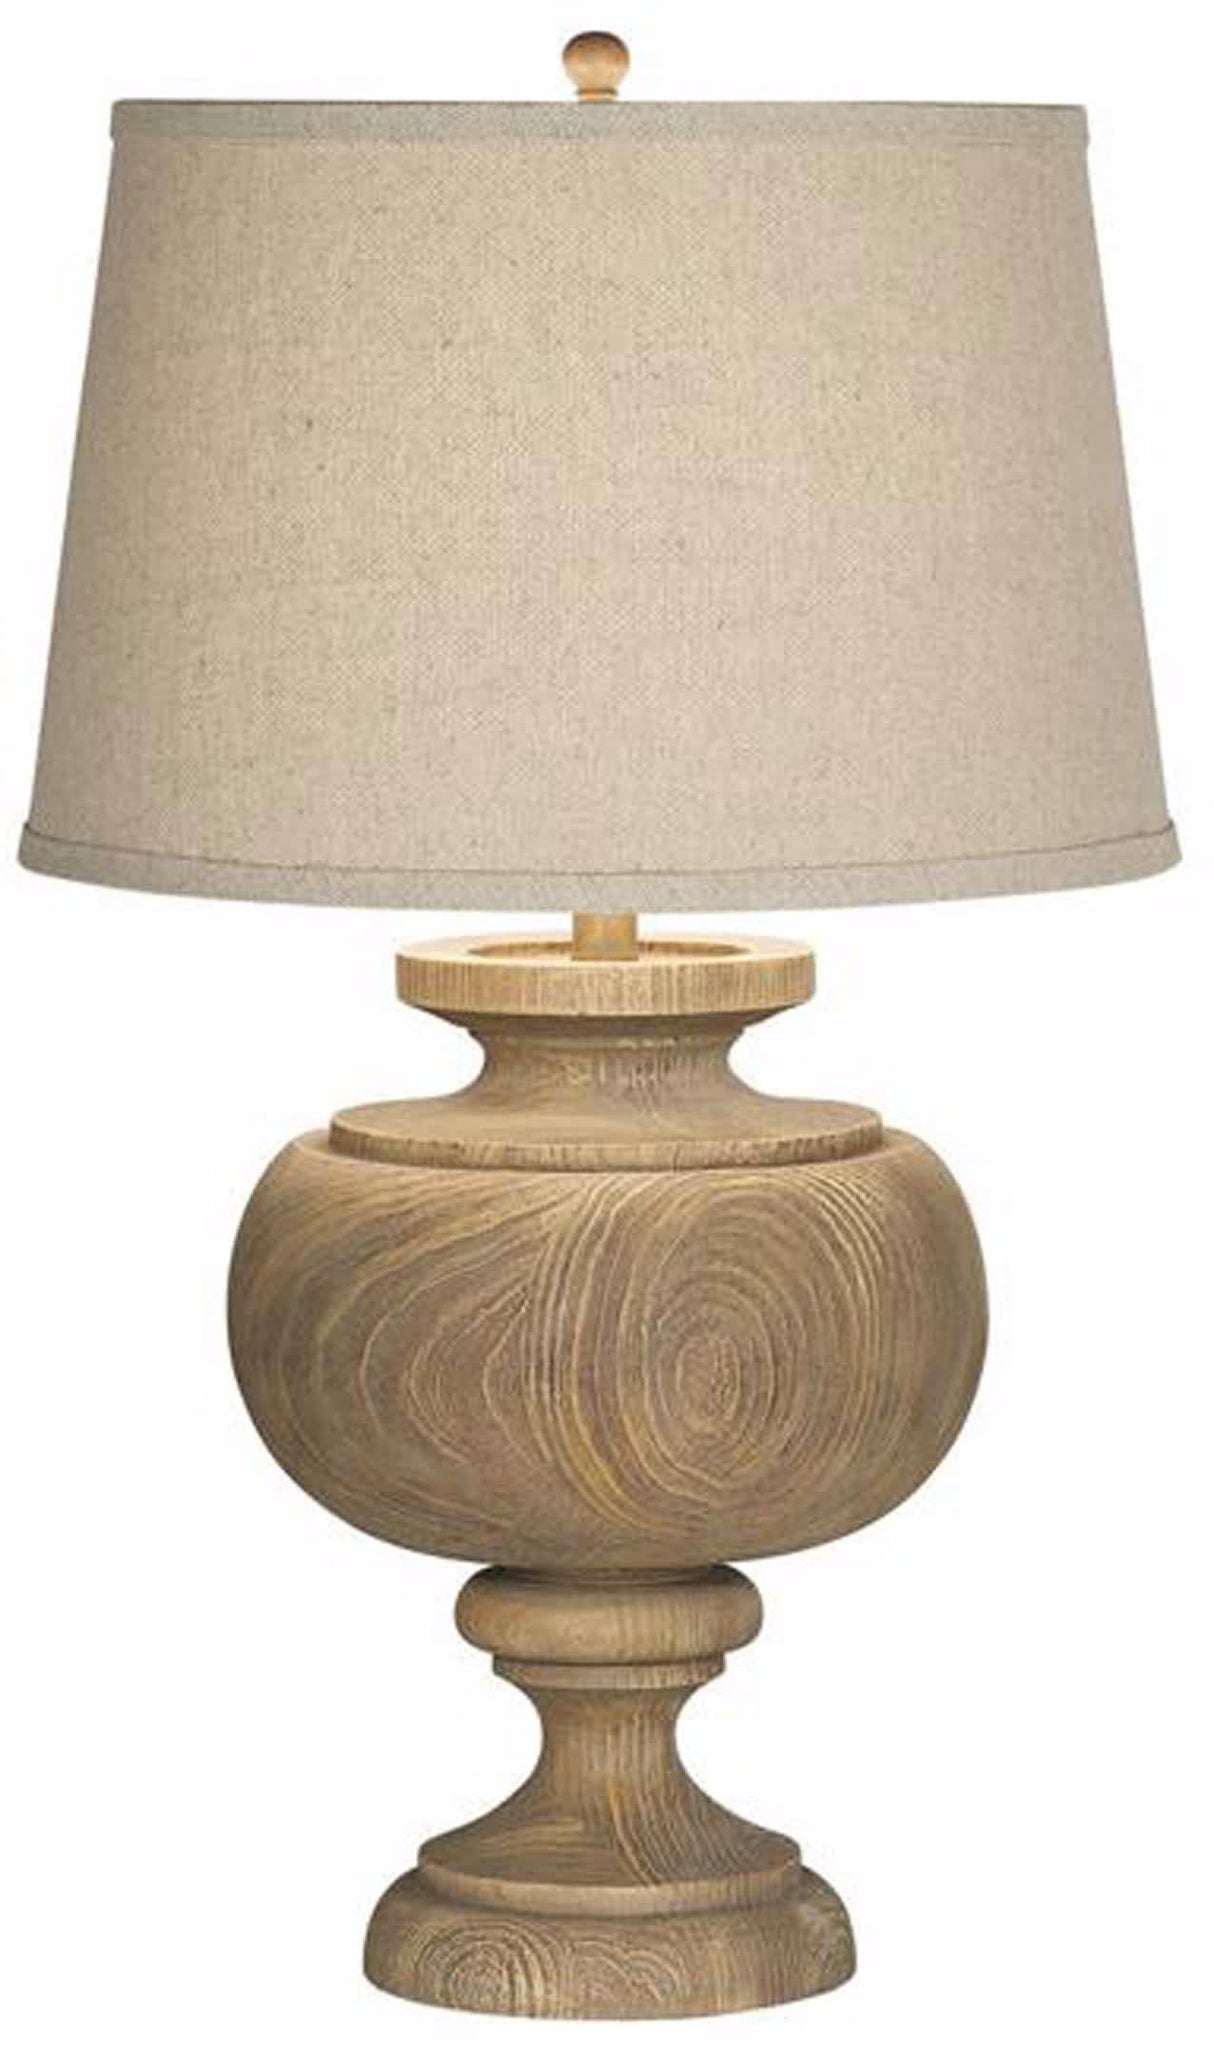 Grand Maison - Table Lamp - Weathered Woodland